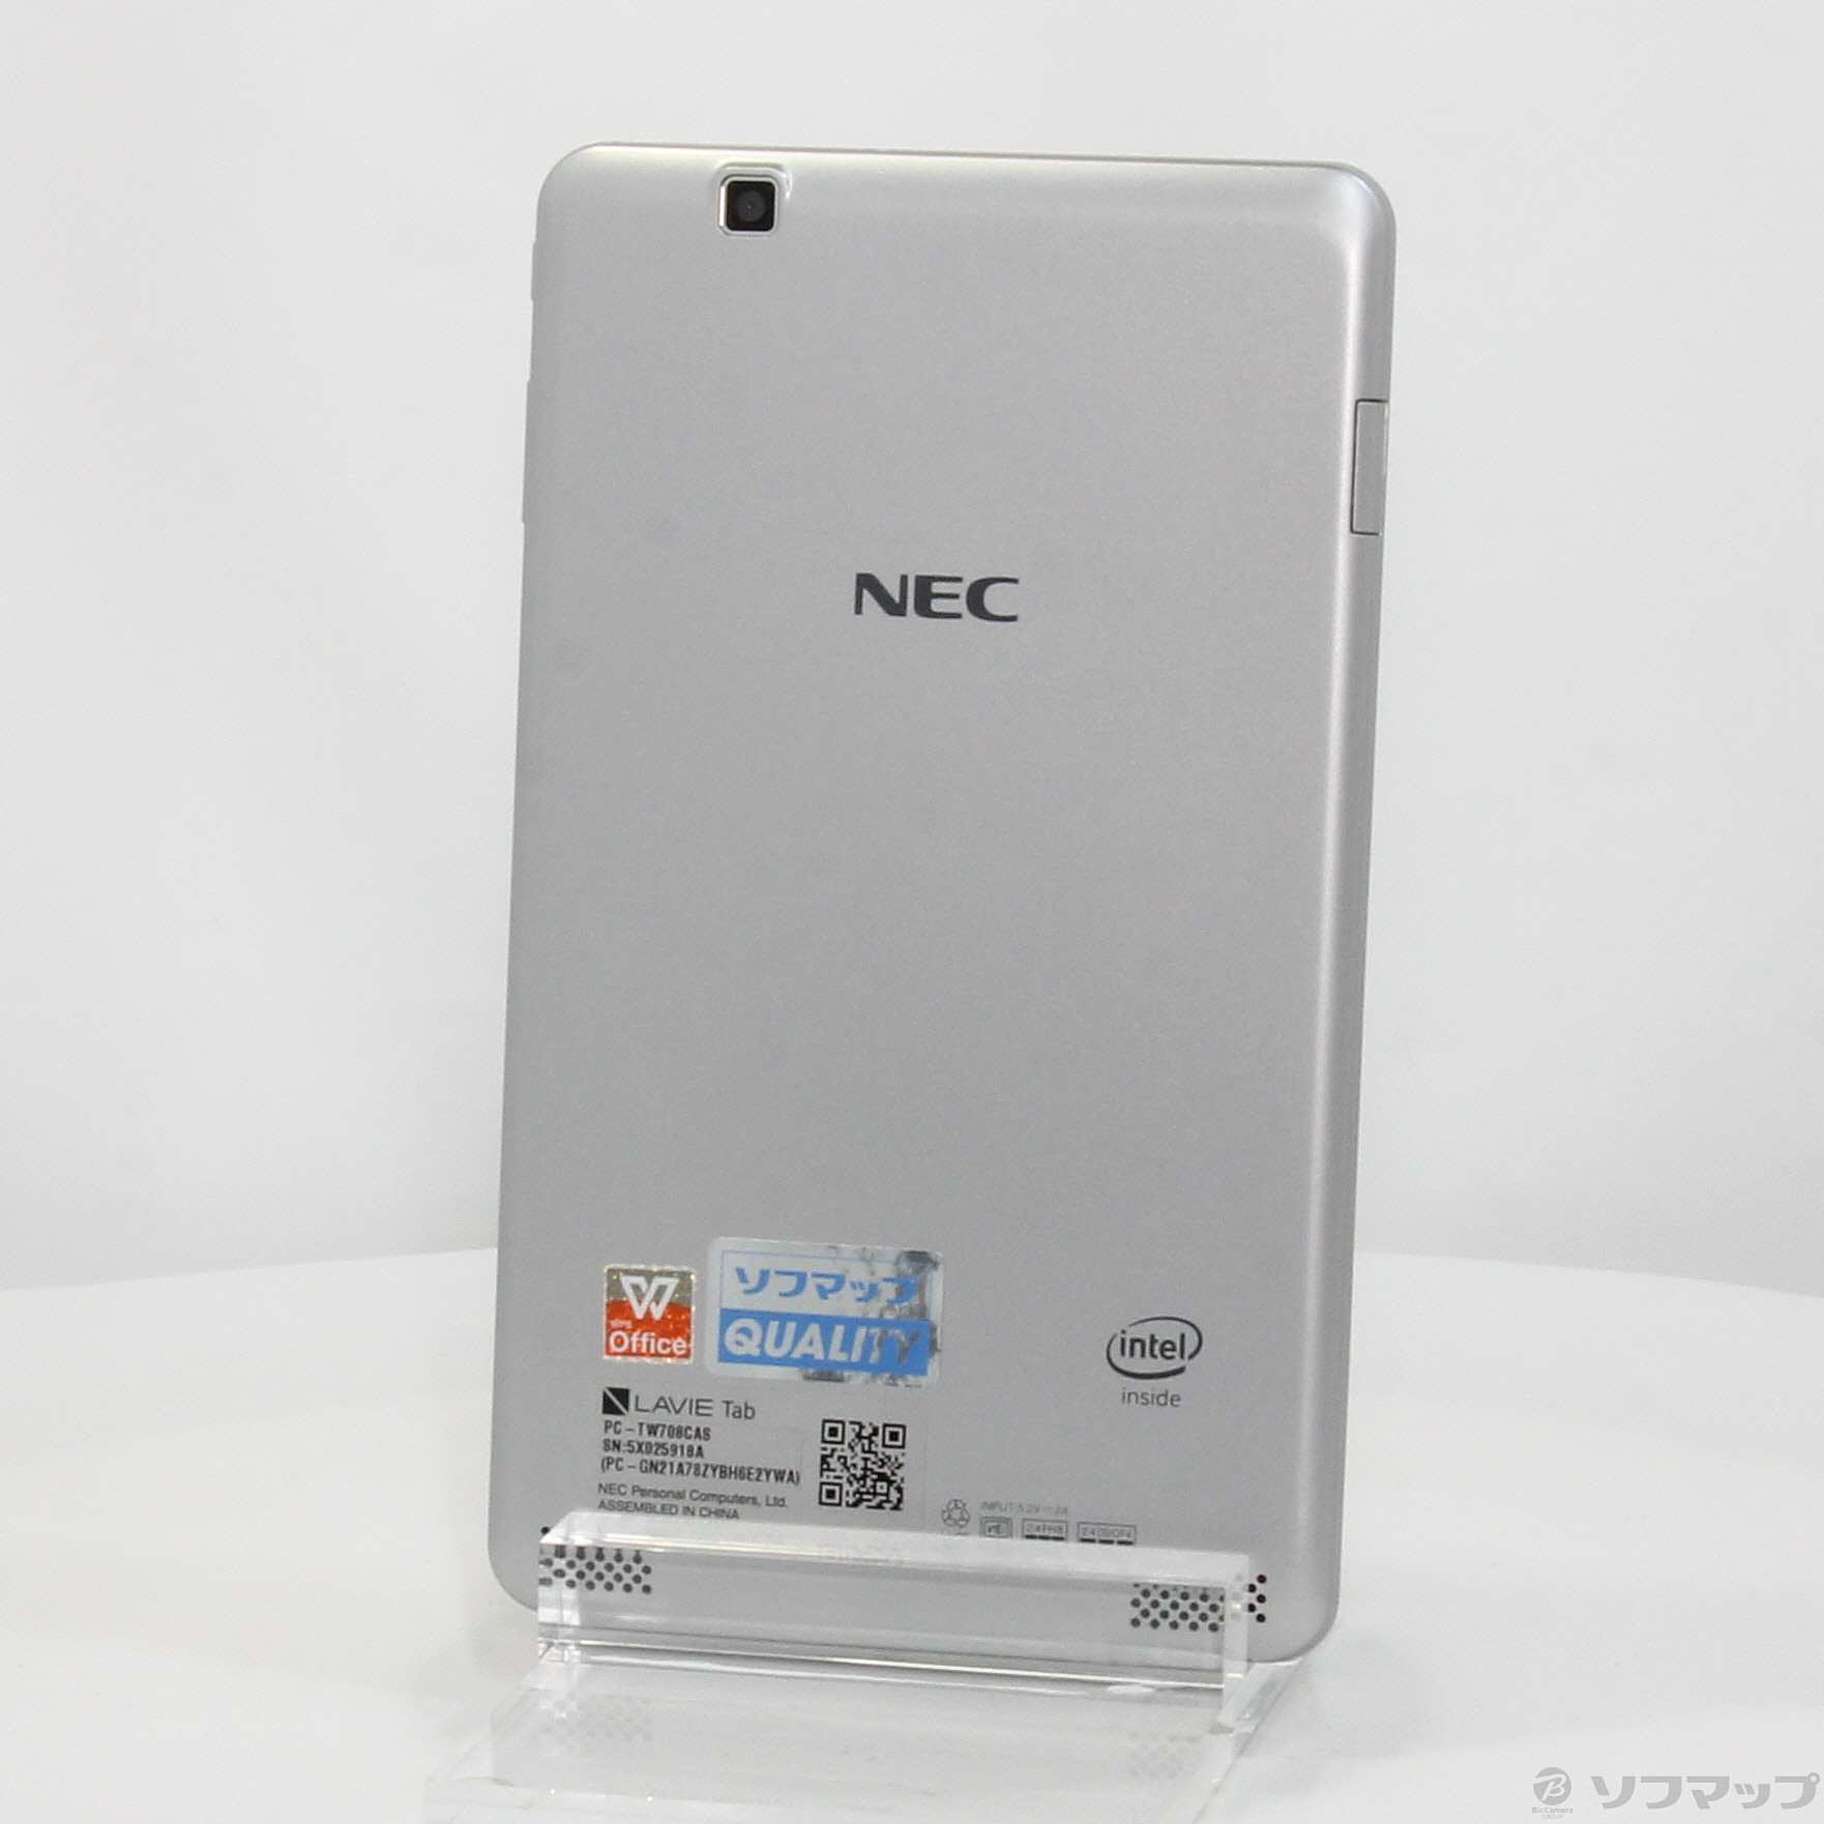 殿堂 NEC LaVie Tab W PC-TW708CAS asakusa.sub.jp